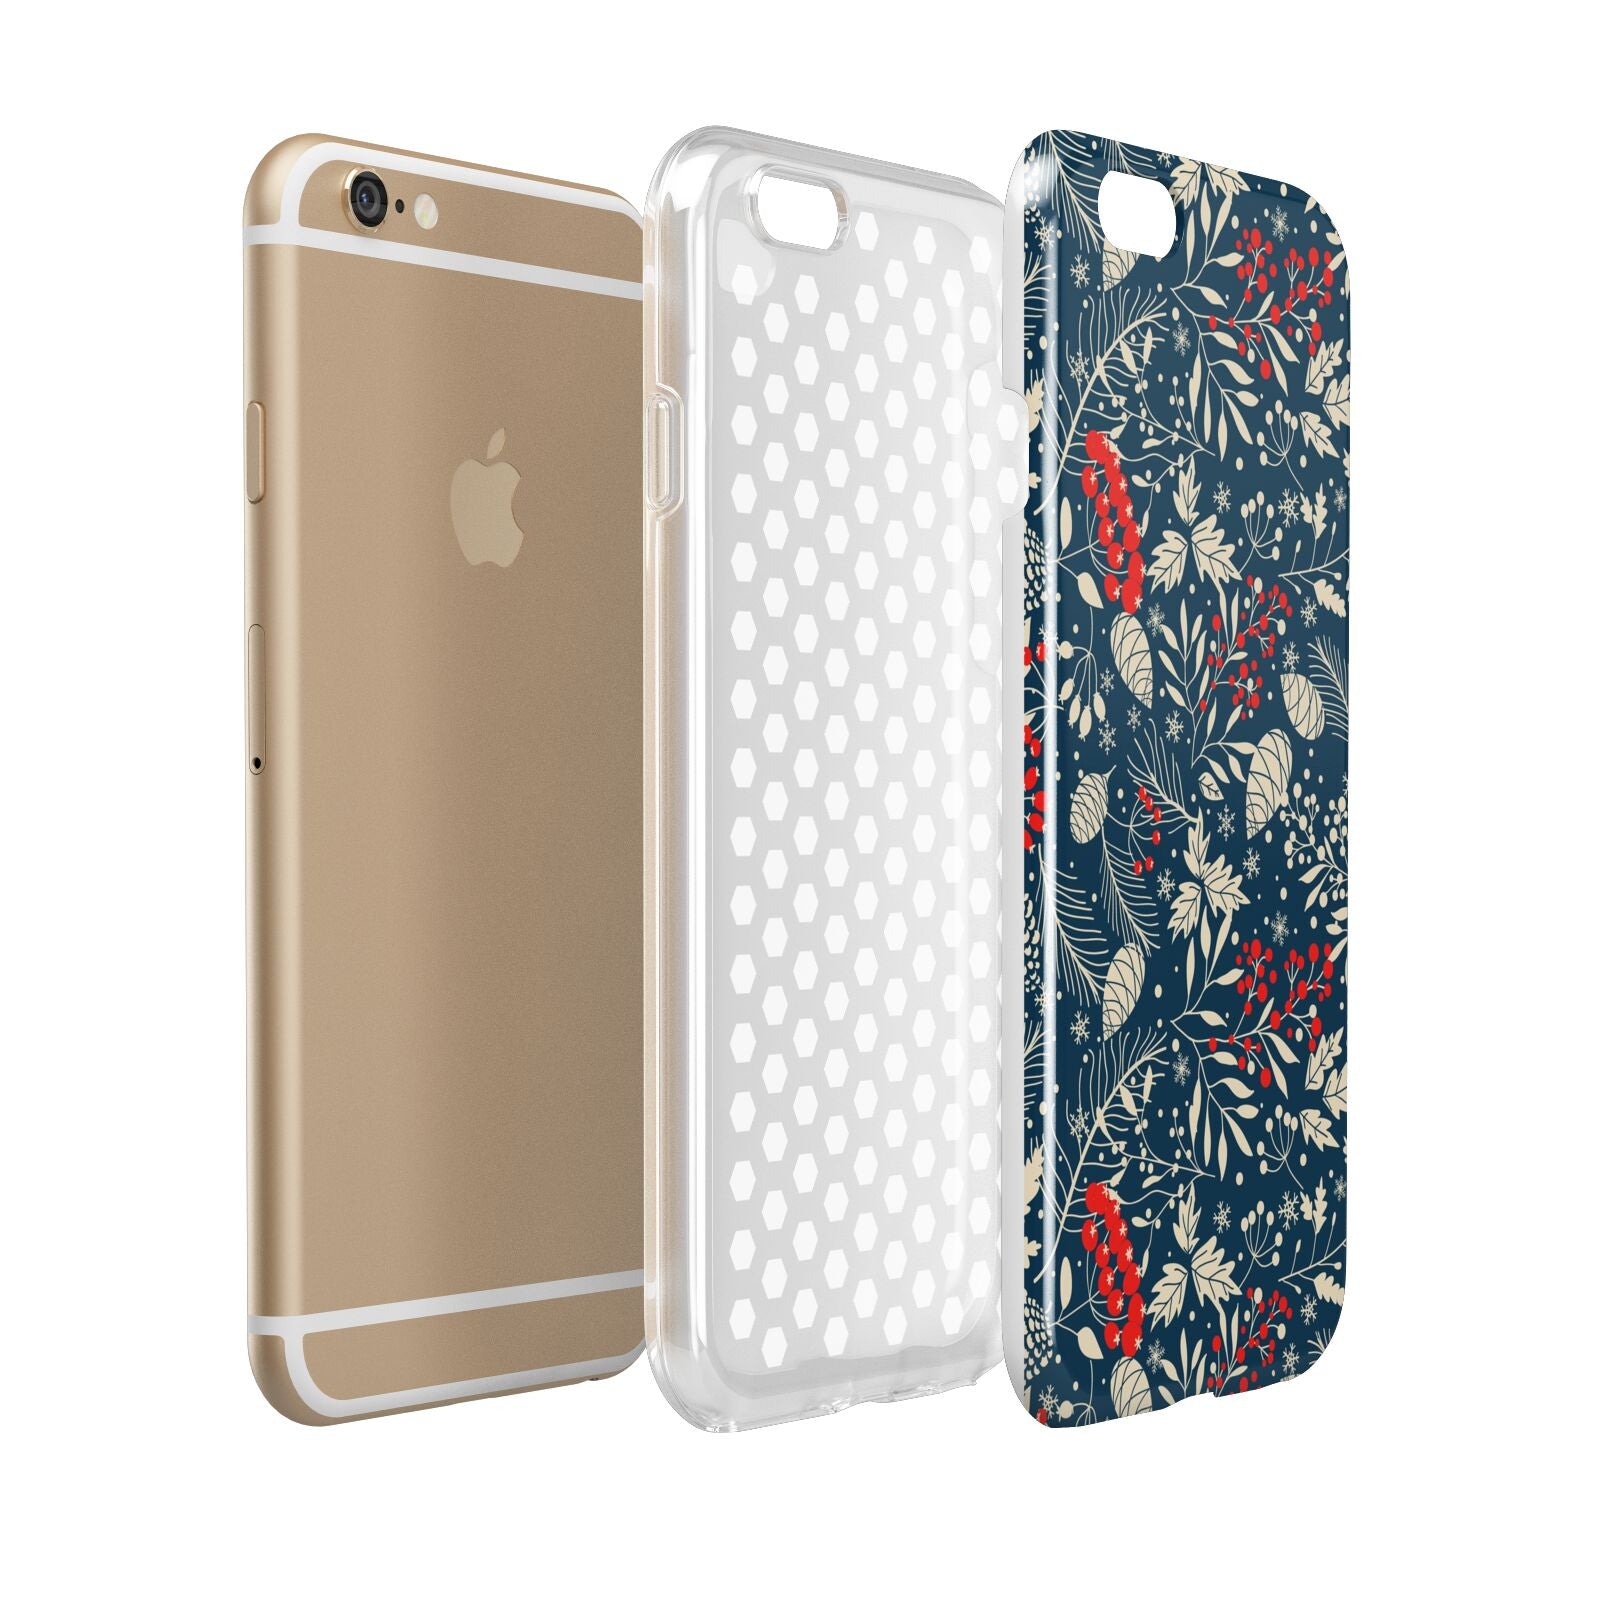 Christmas Floral Apple iPhone 6 3D Tough Case Expanded view